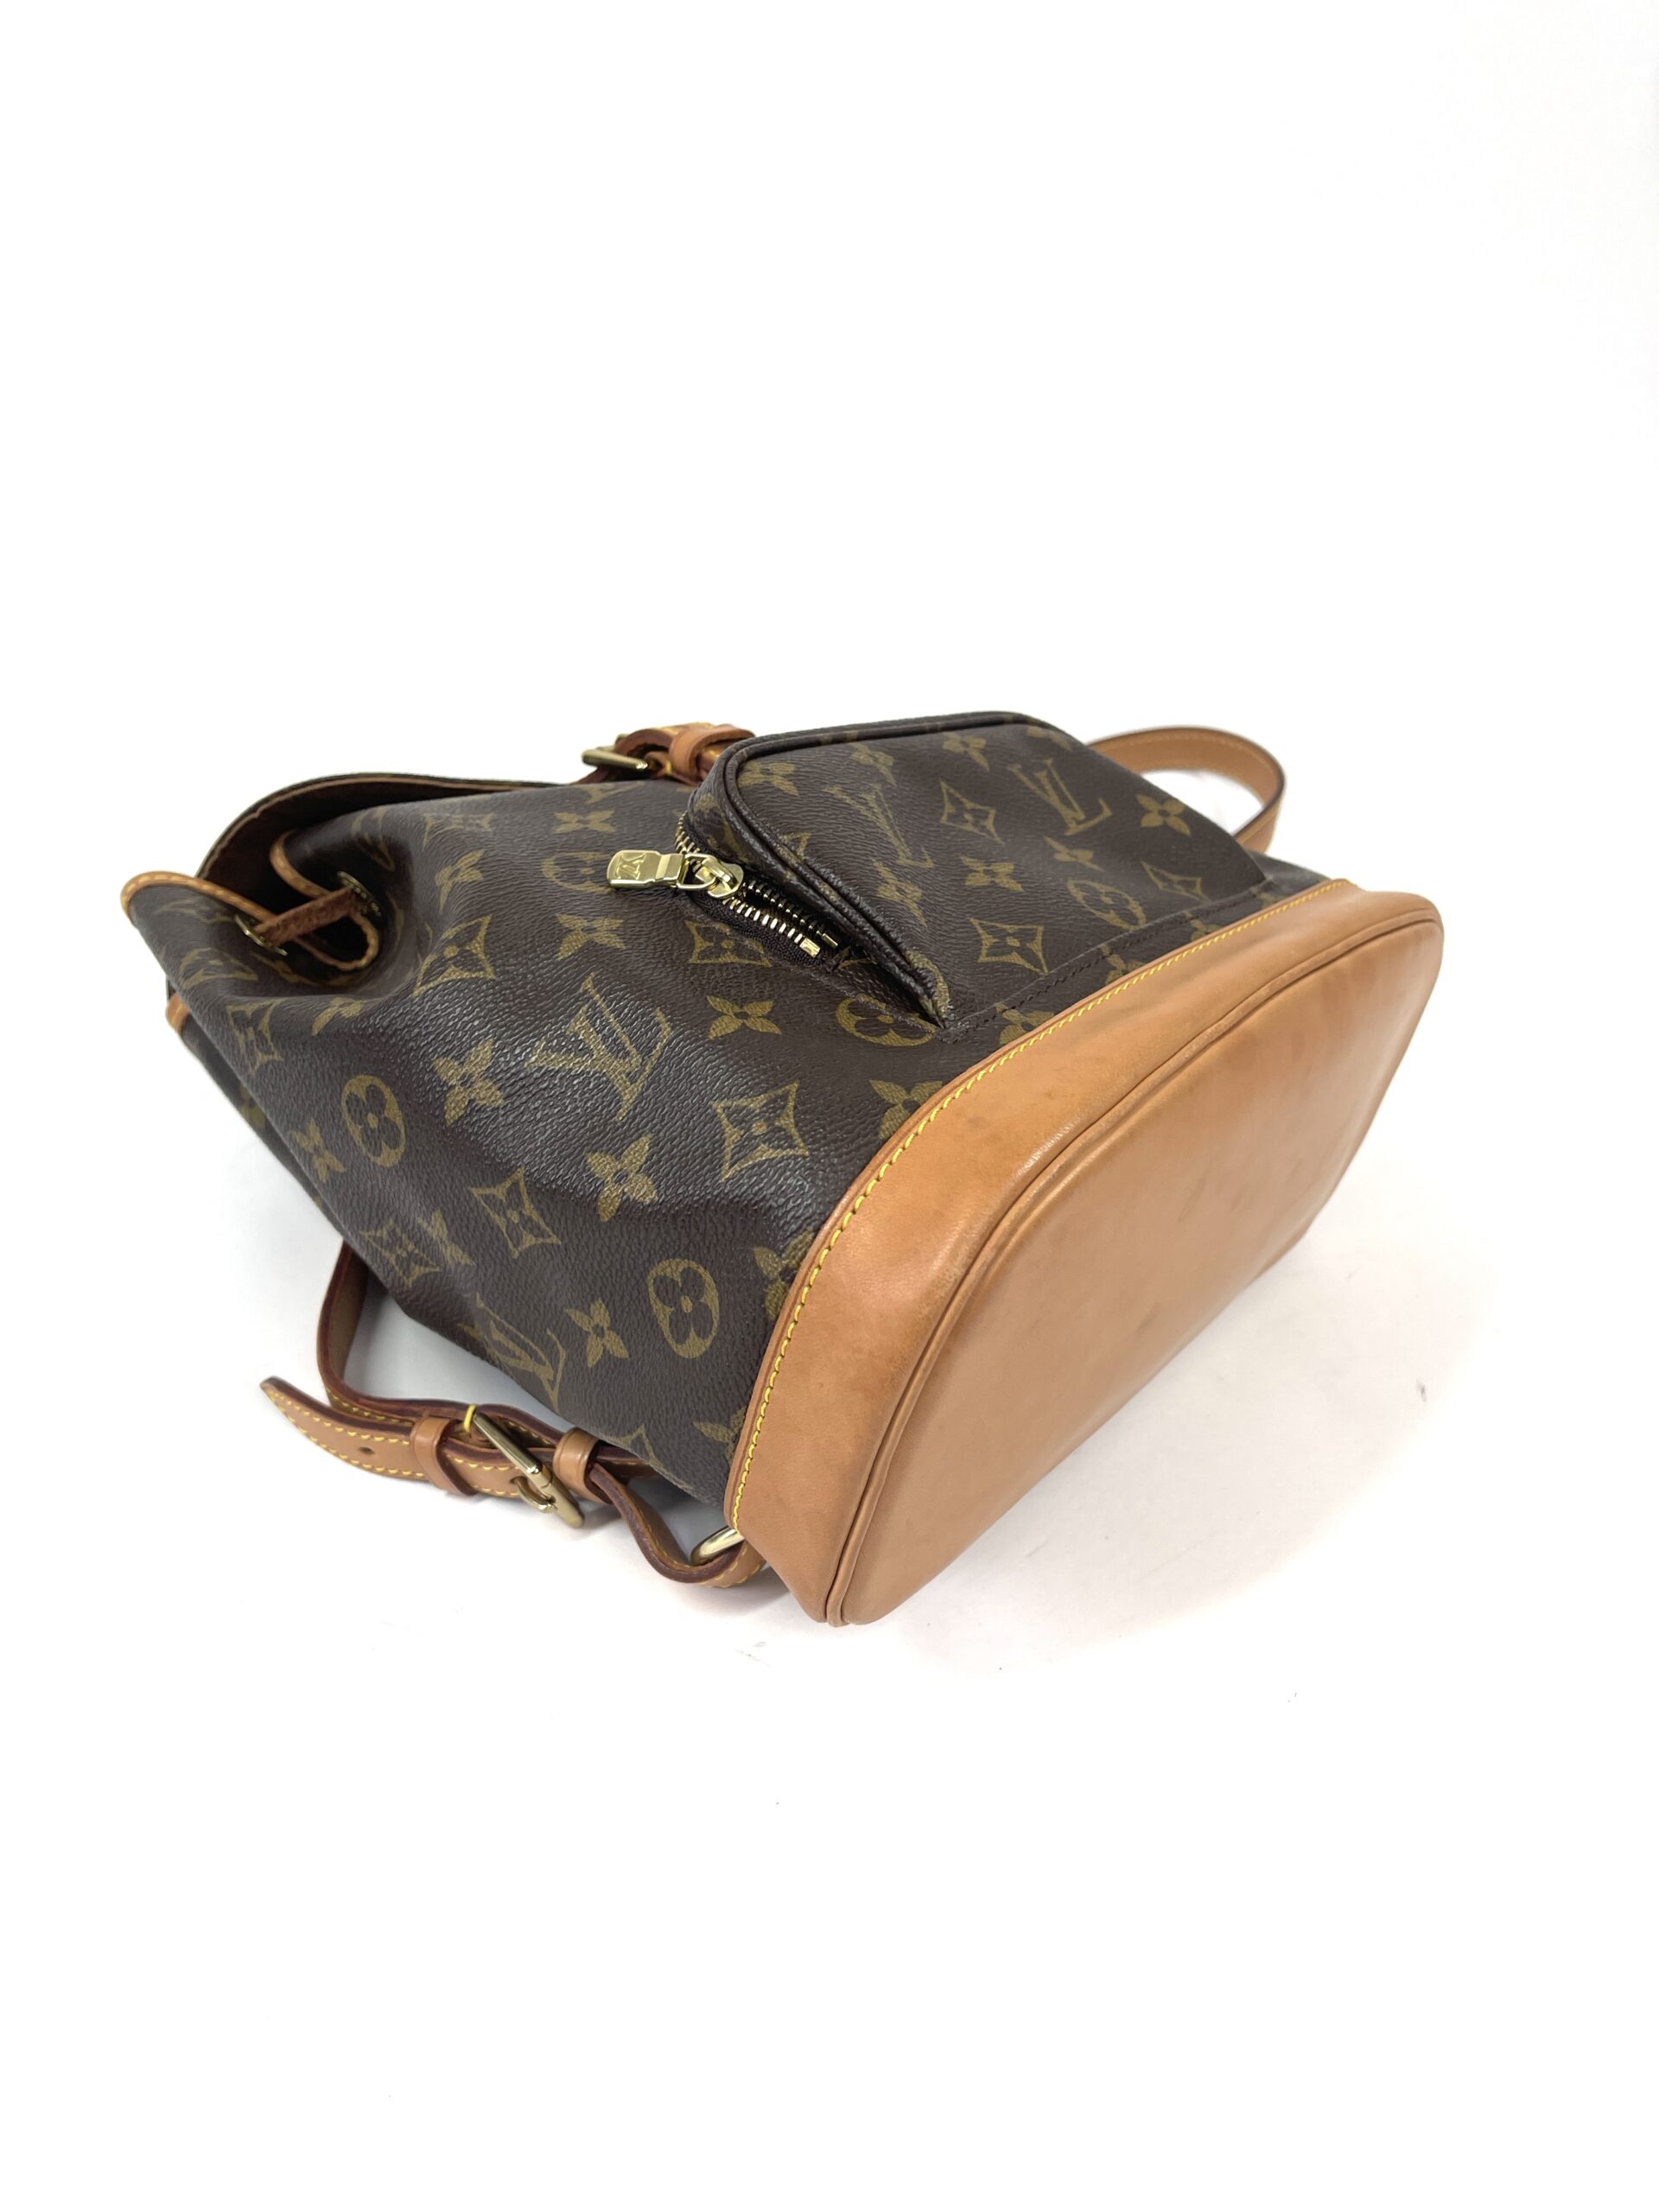 Louis Vuitton Damier Ebene Montsouris MM Backpack Bag